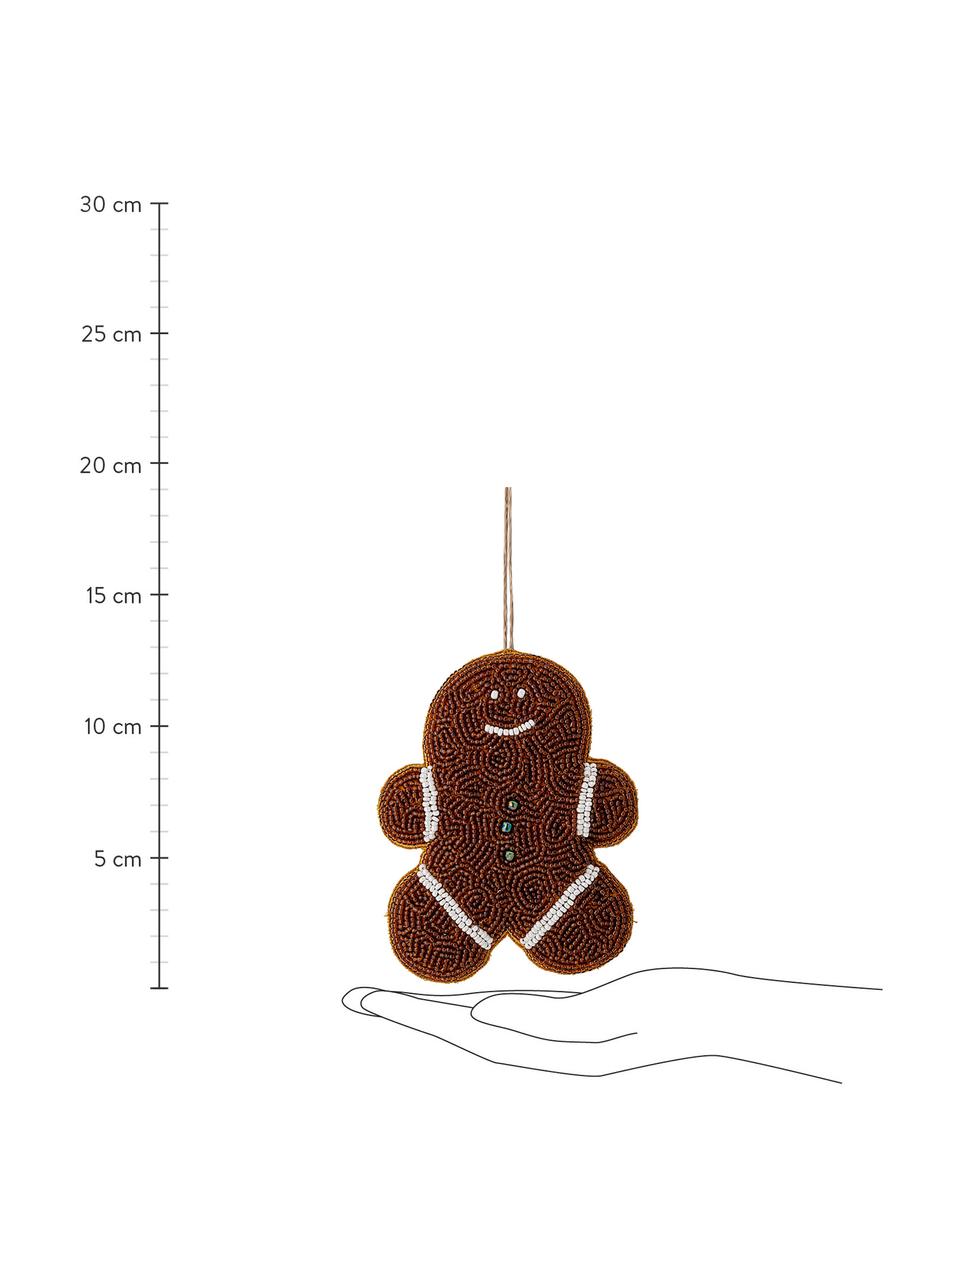 Baumanhänger-Set Cookie H 13 cm, 2 Stück, Braun, Goldfarben, Weiss, Gelb, 10 x 13 cm